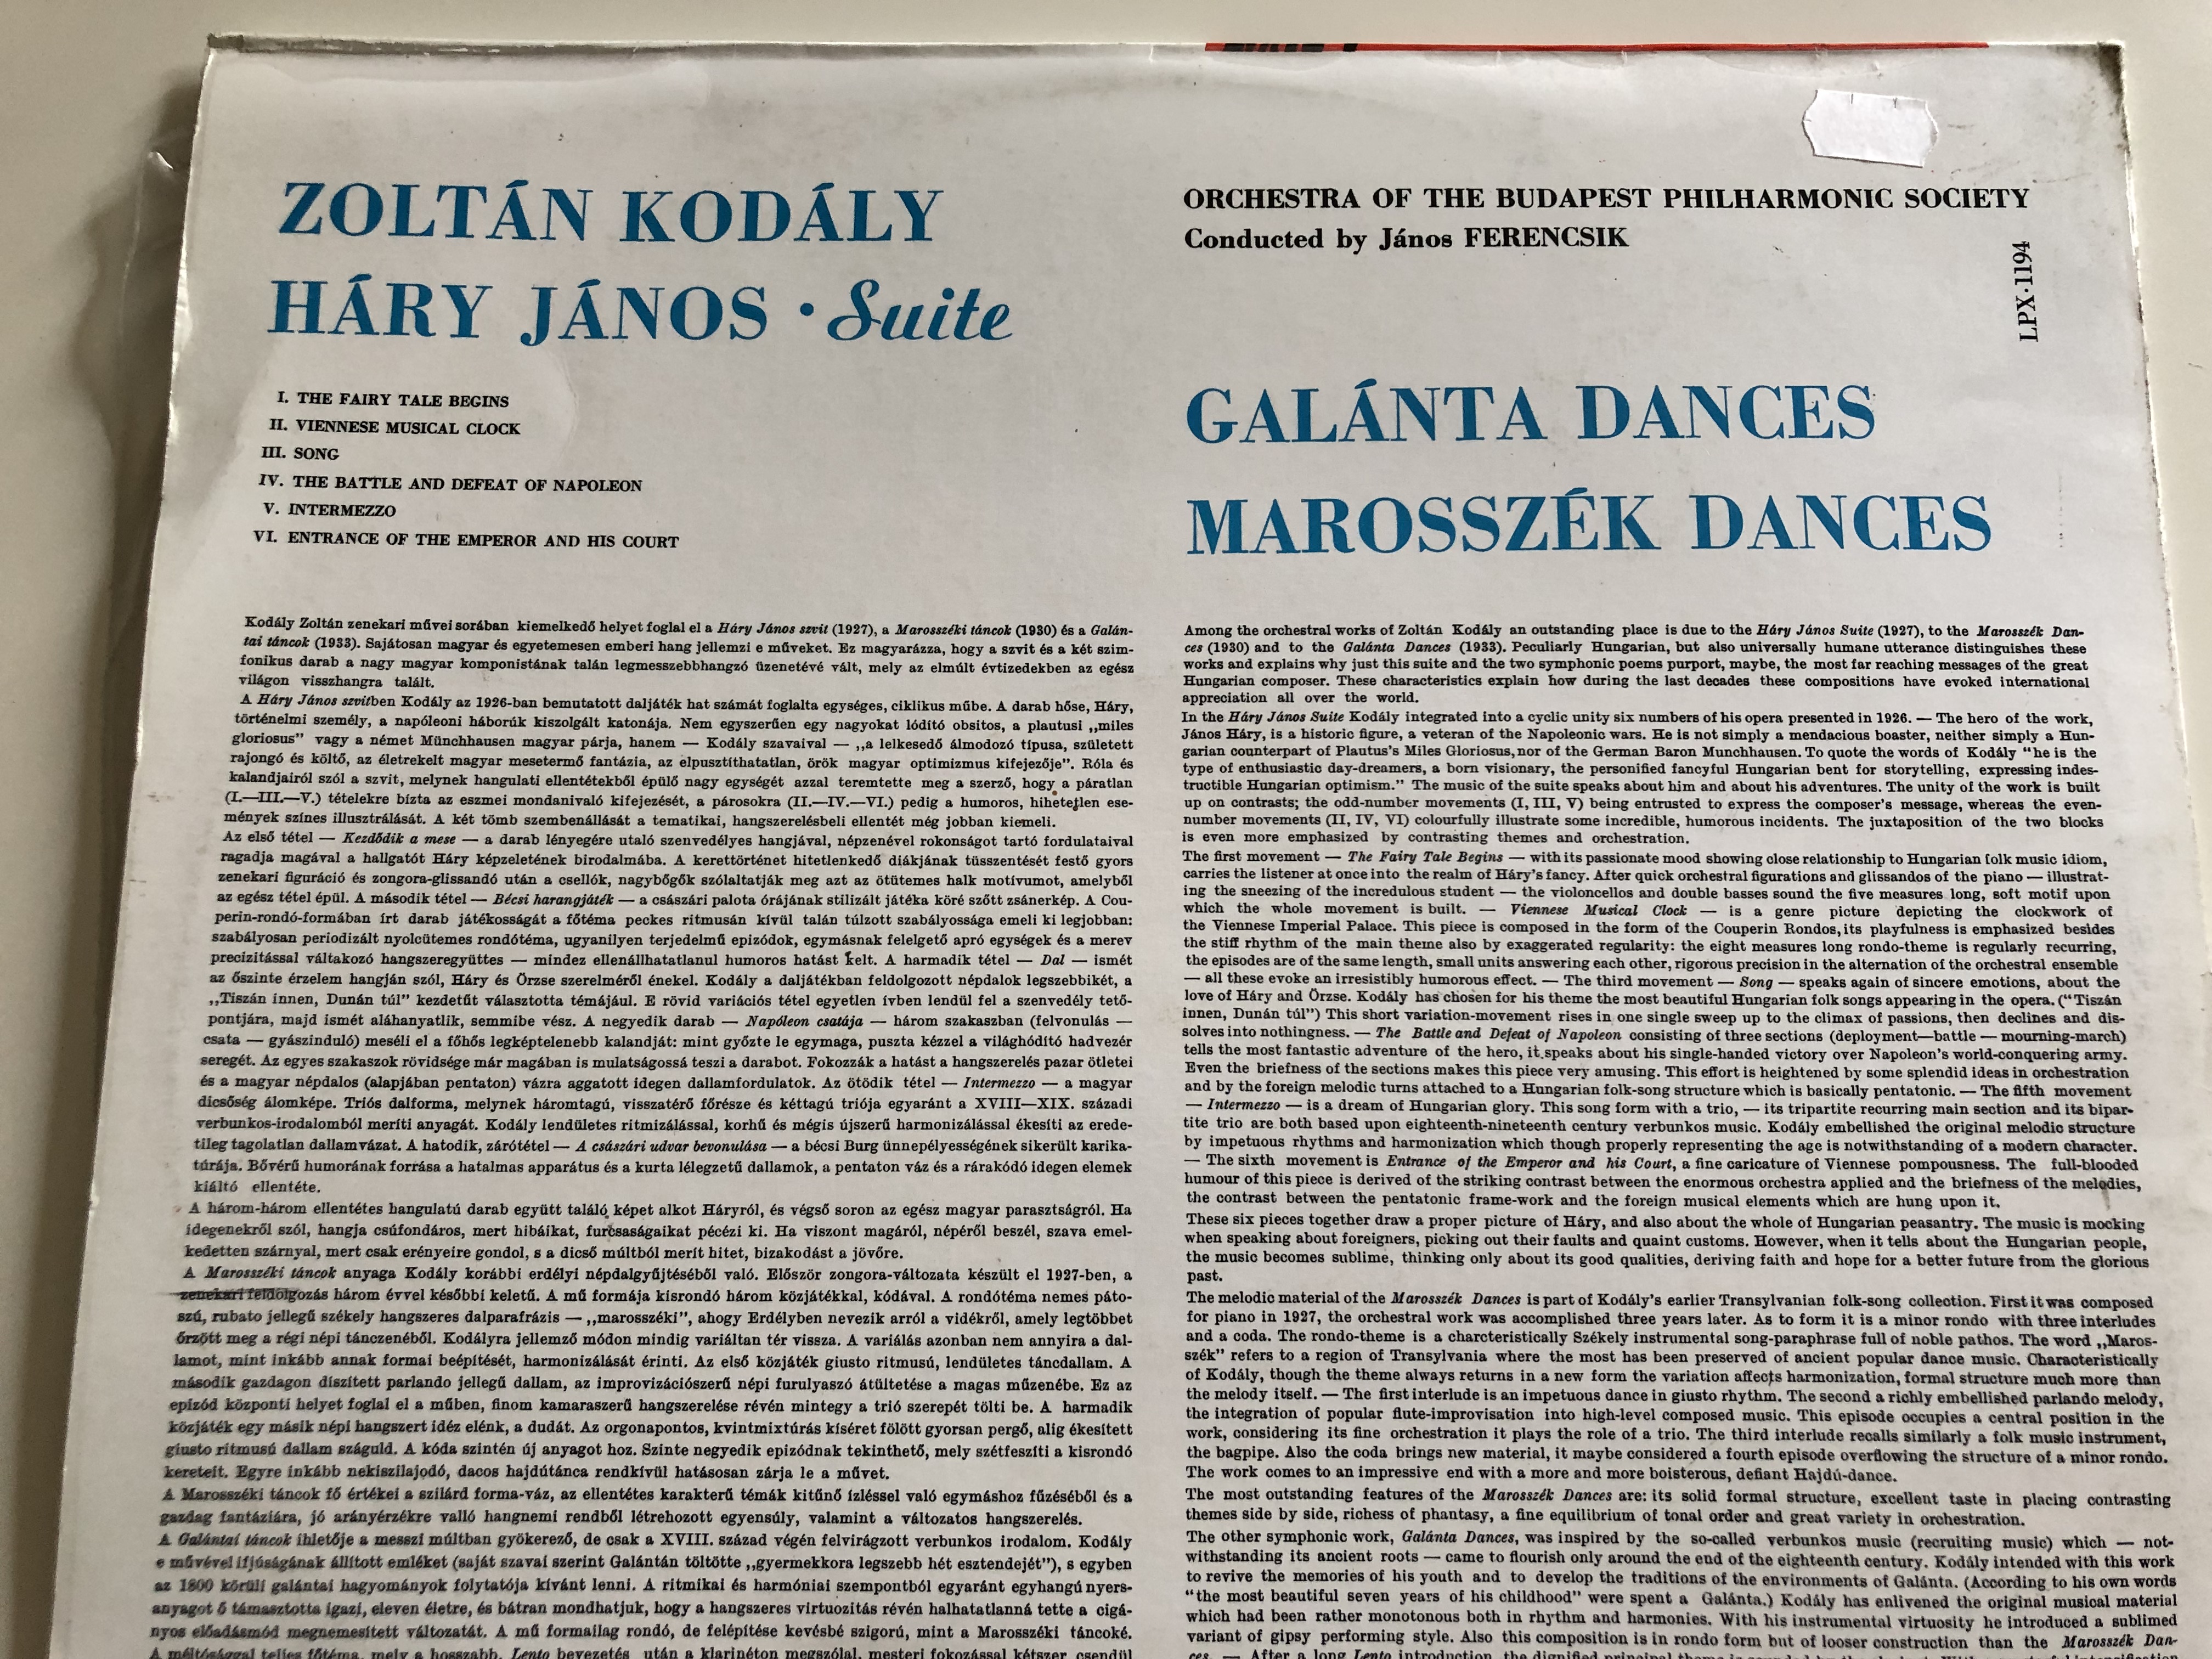 kod-ly-h-ry-j-nos-suite-marossz-k-dances-gal-nta-dances-the-budapest-philharmonic-society-orchestra-conducted-j-nos-ferencsik-qulation-lp-stereo-mono-lpx-1194-3-.jpg